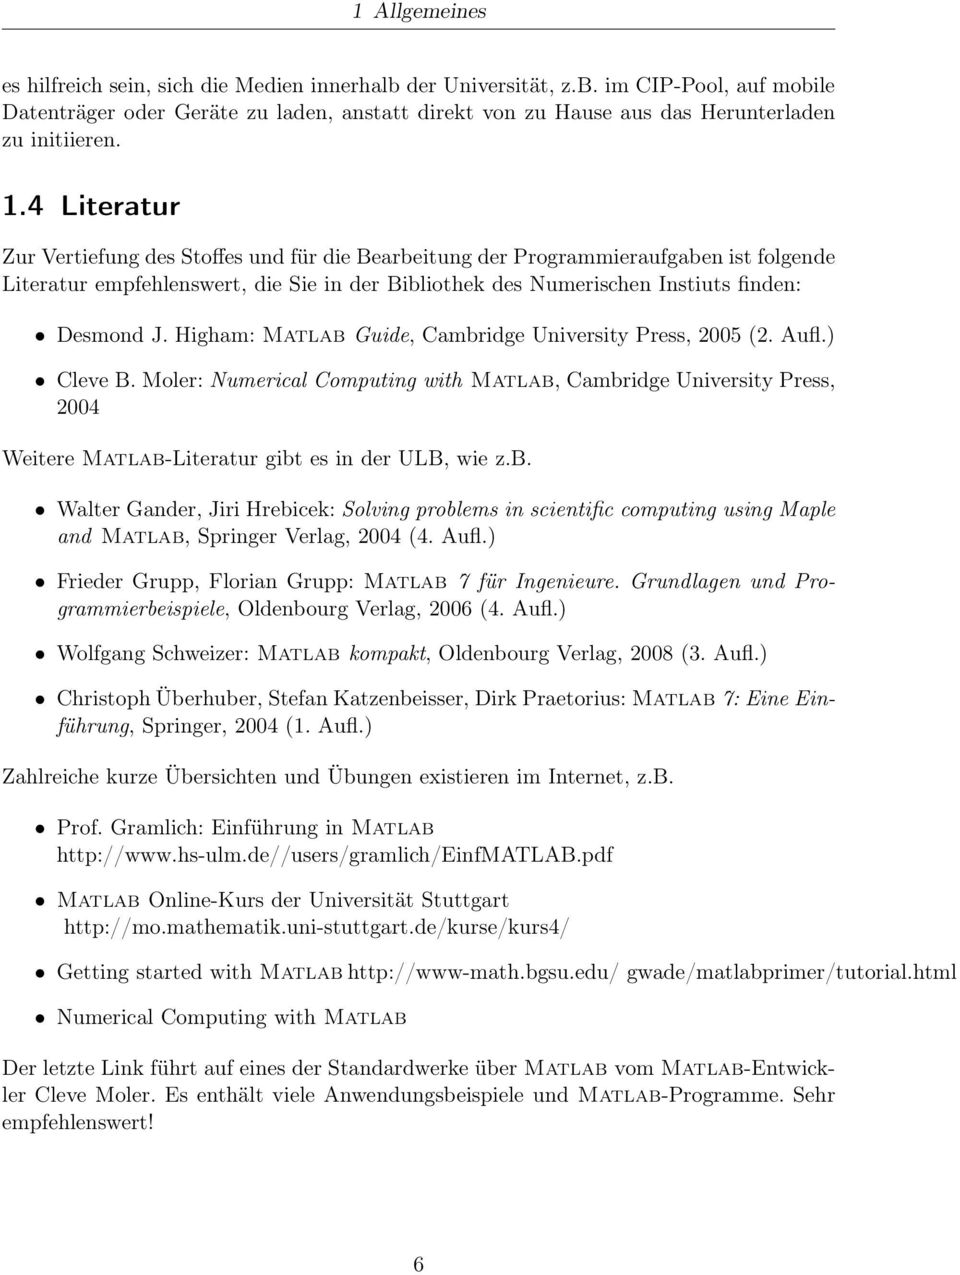 Higham: Matlab Guide, Cambridge University Press, 2005 (2. Aufl.) Cleve B. Moler: Numerical Computing with Matlab, Cambridge University Press, 2004 Weitere Matlab-Literatur gibt es in der ULB, wie z.